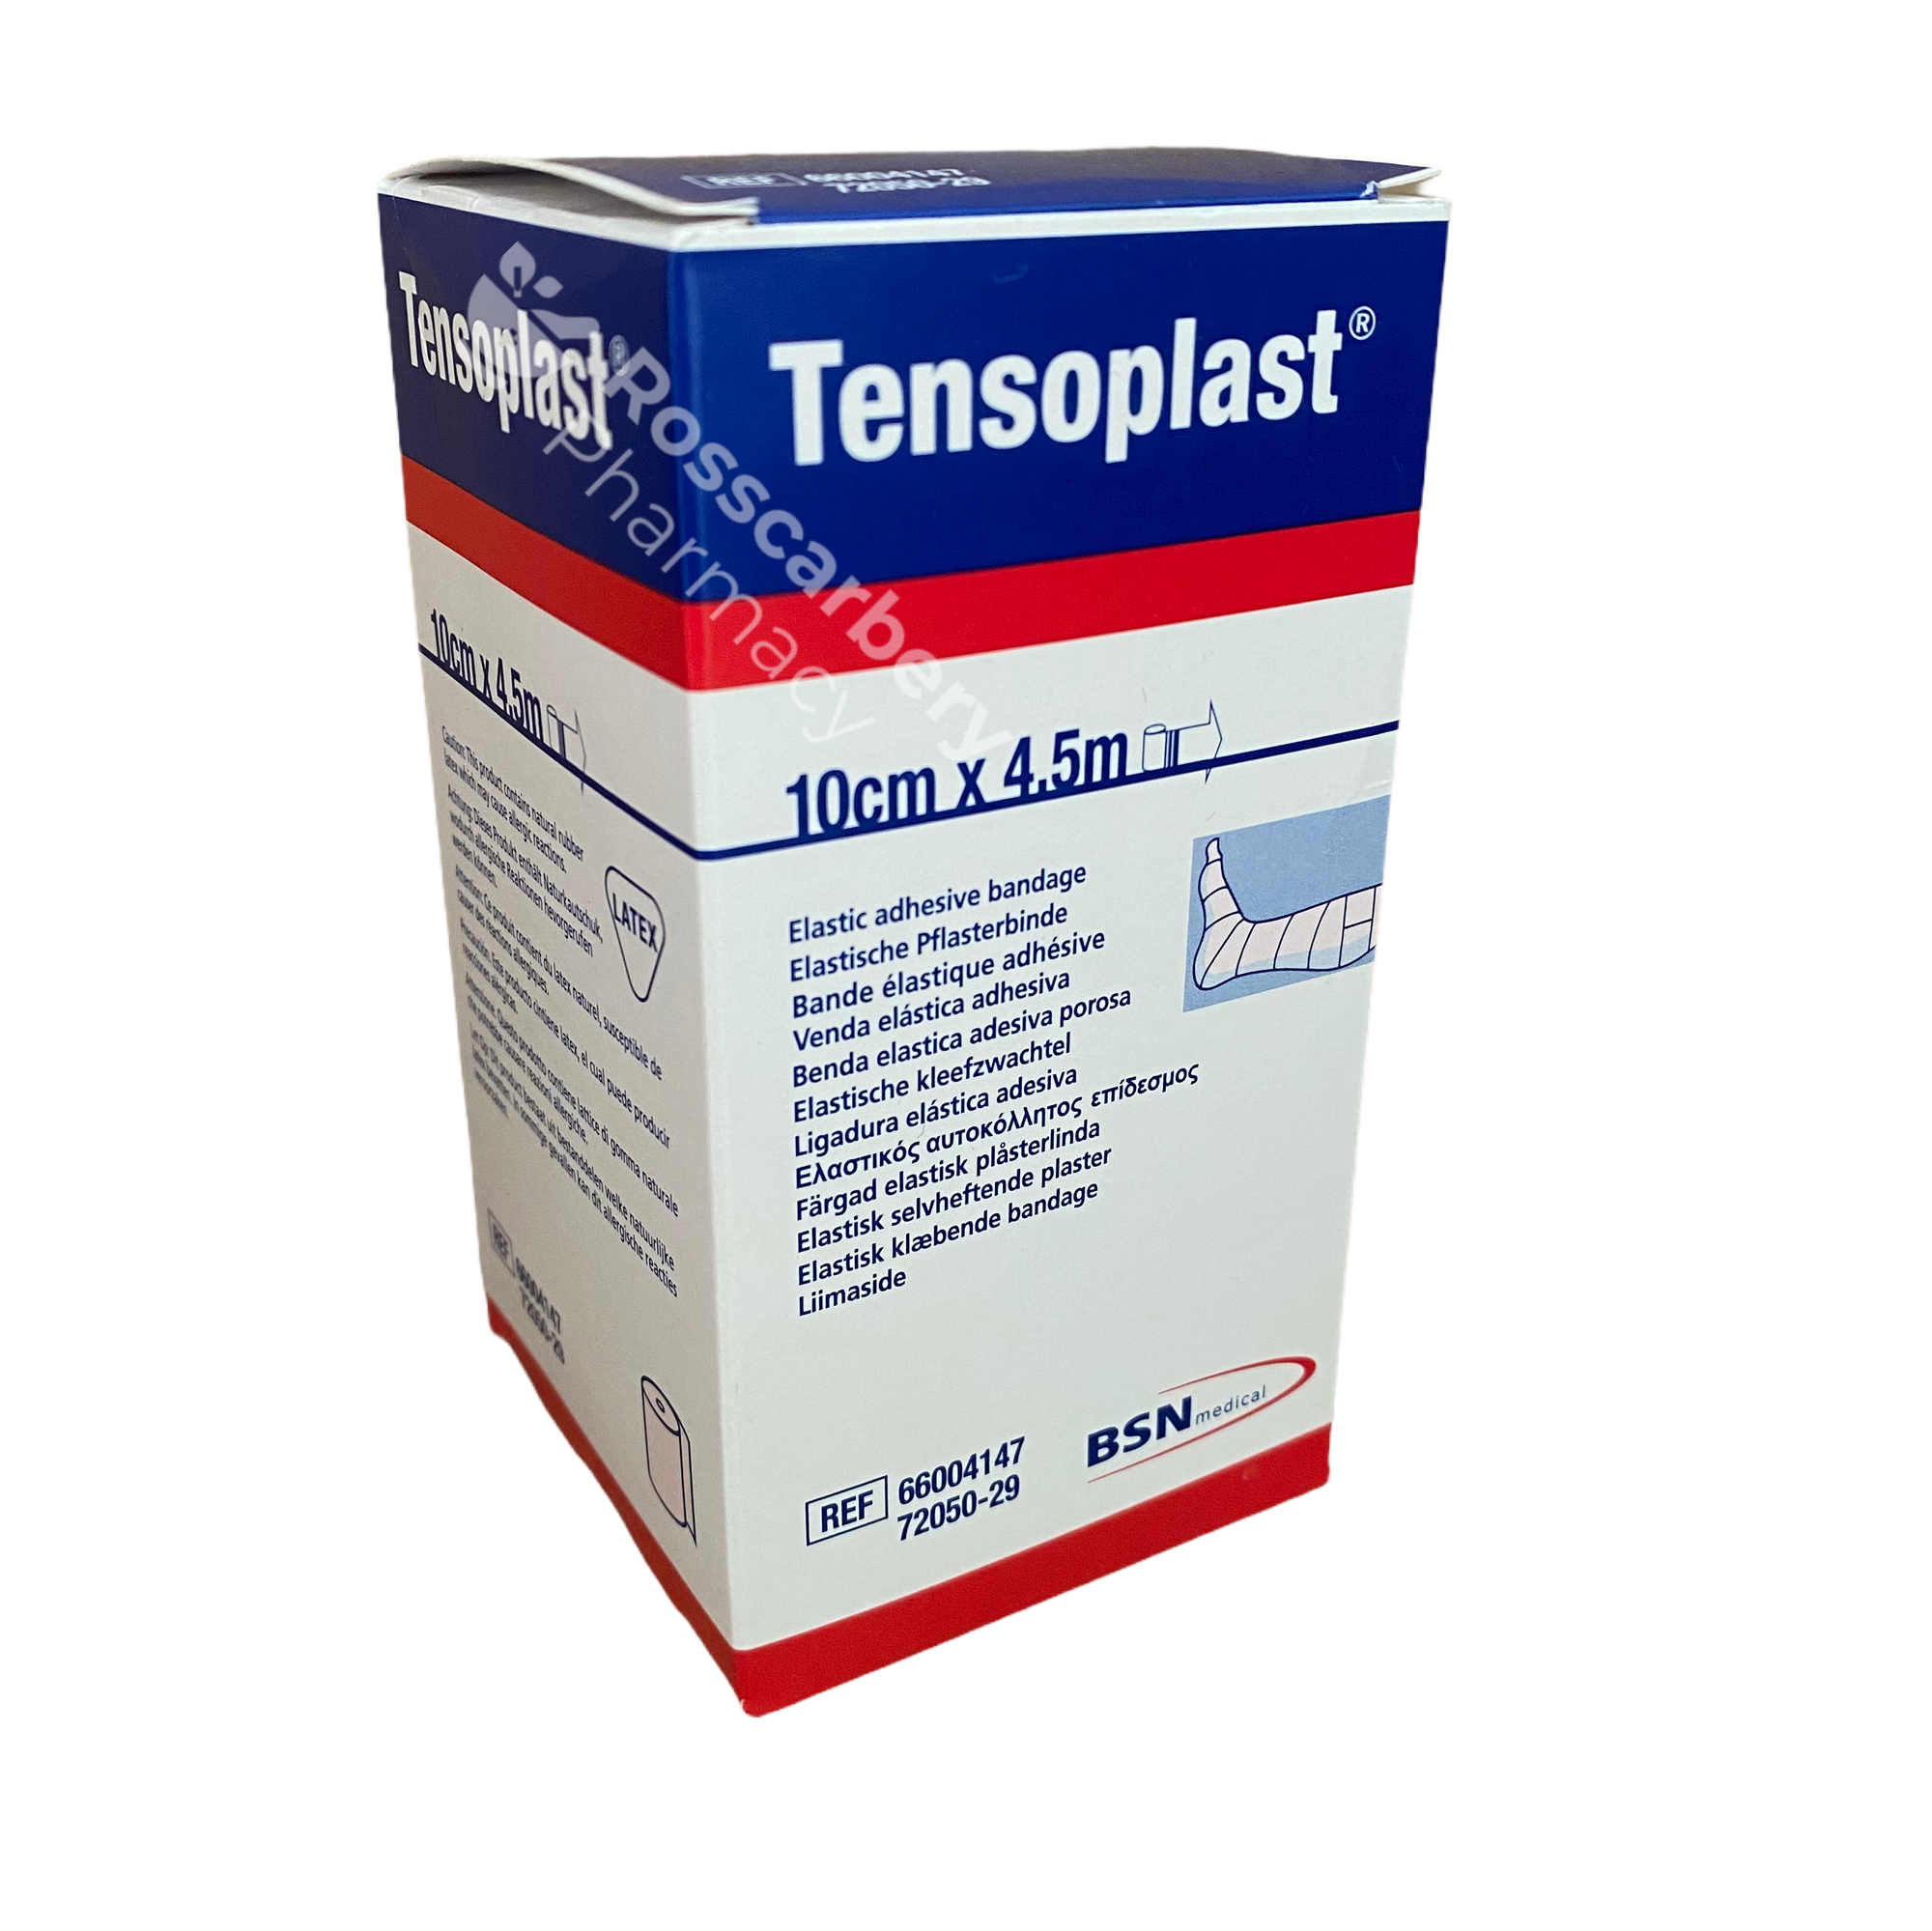 Tensoplast Elastic adhesive Bandage - 10cm x 4.5m